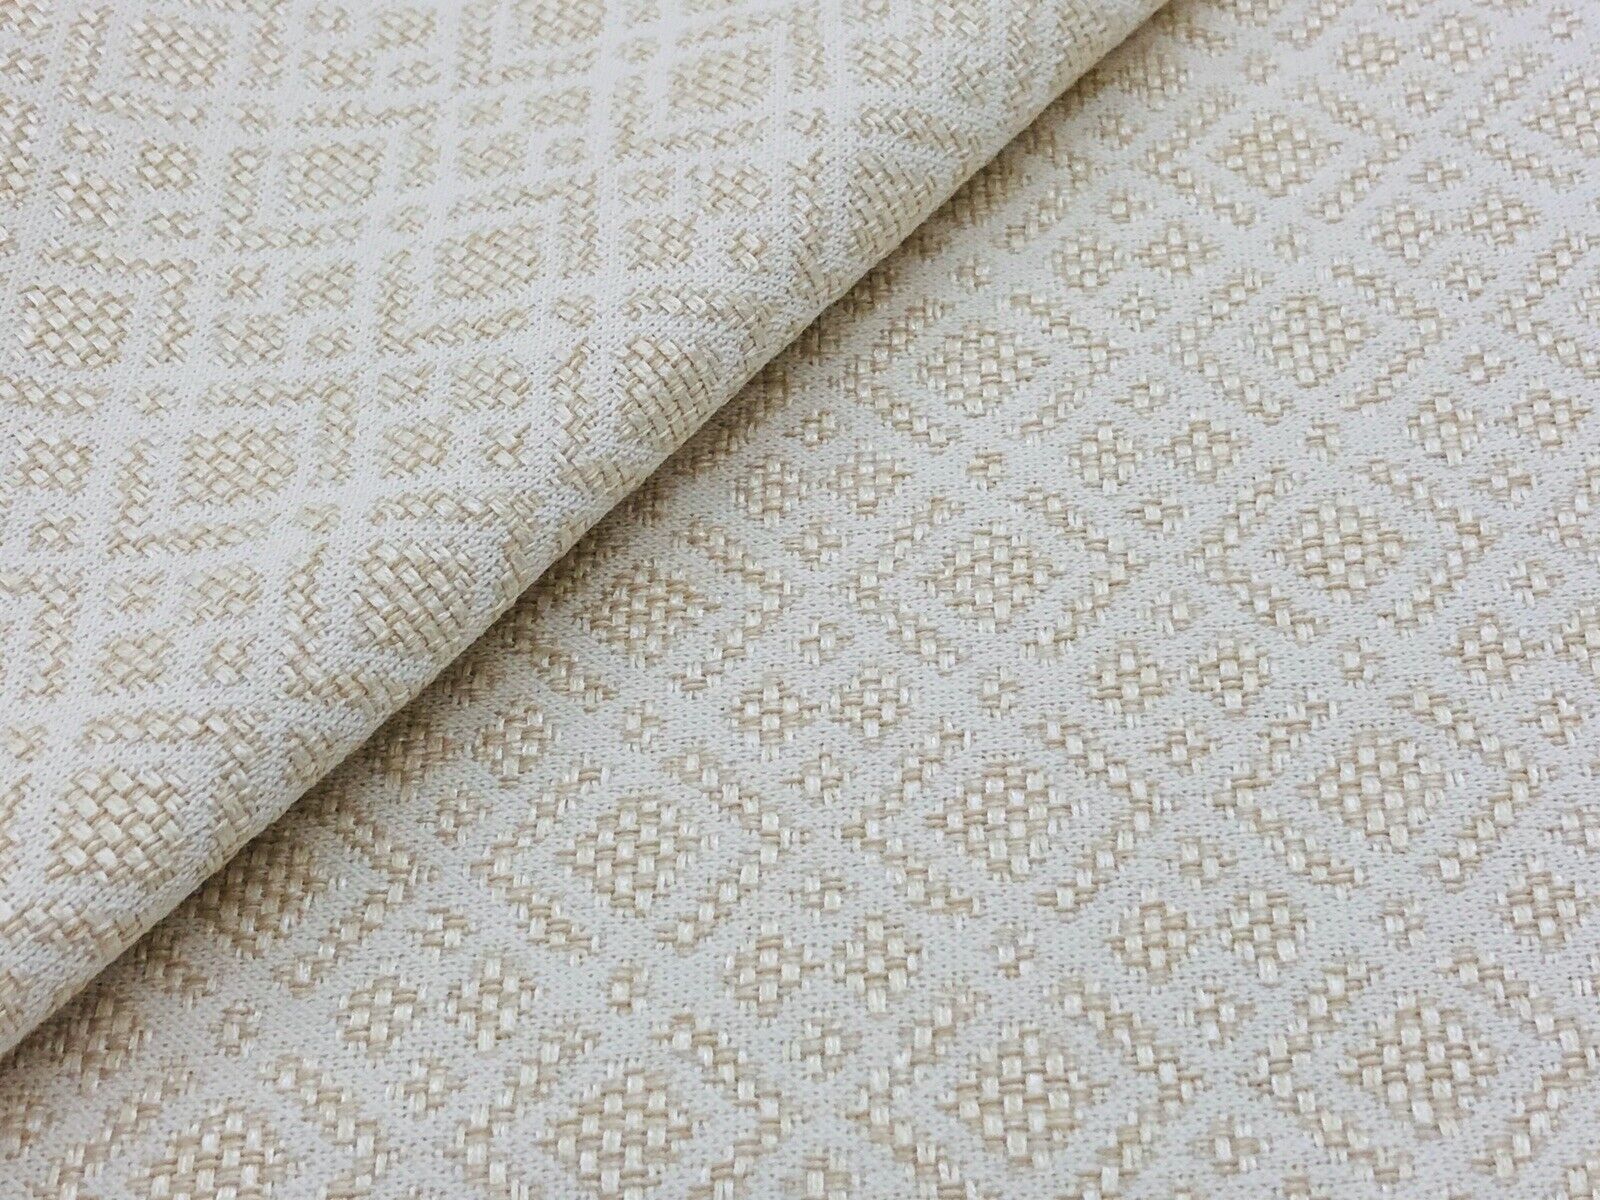 Hodsoll McKenzie Diamond Weave Uphol Fabric- Sloane / Biscuit 4.50 yd 1021175991